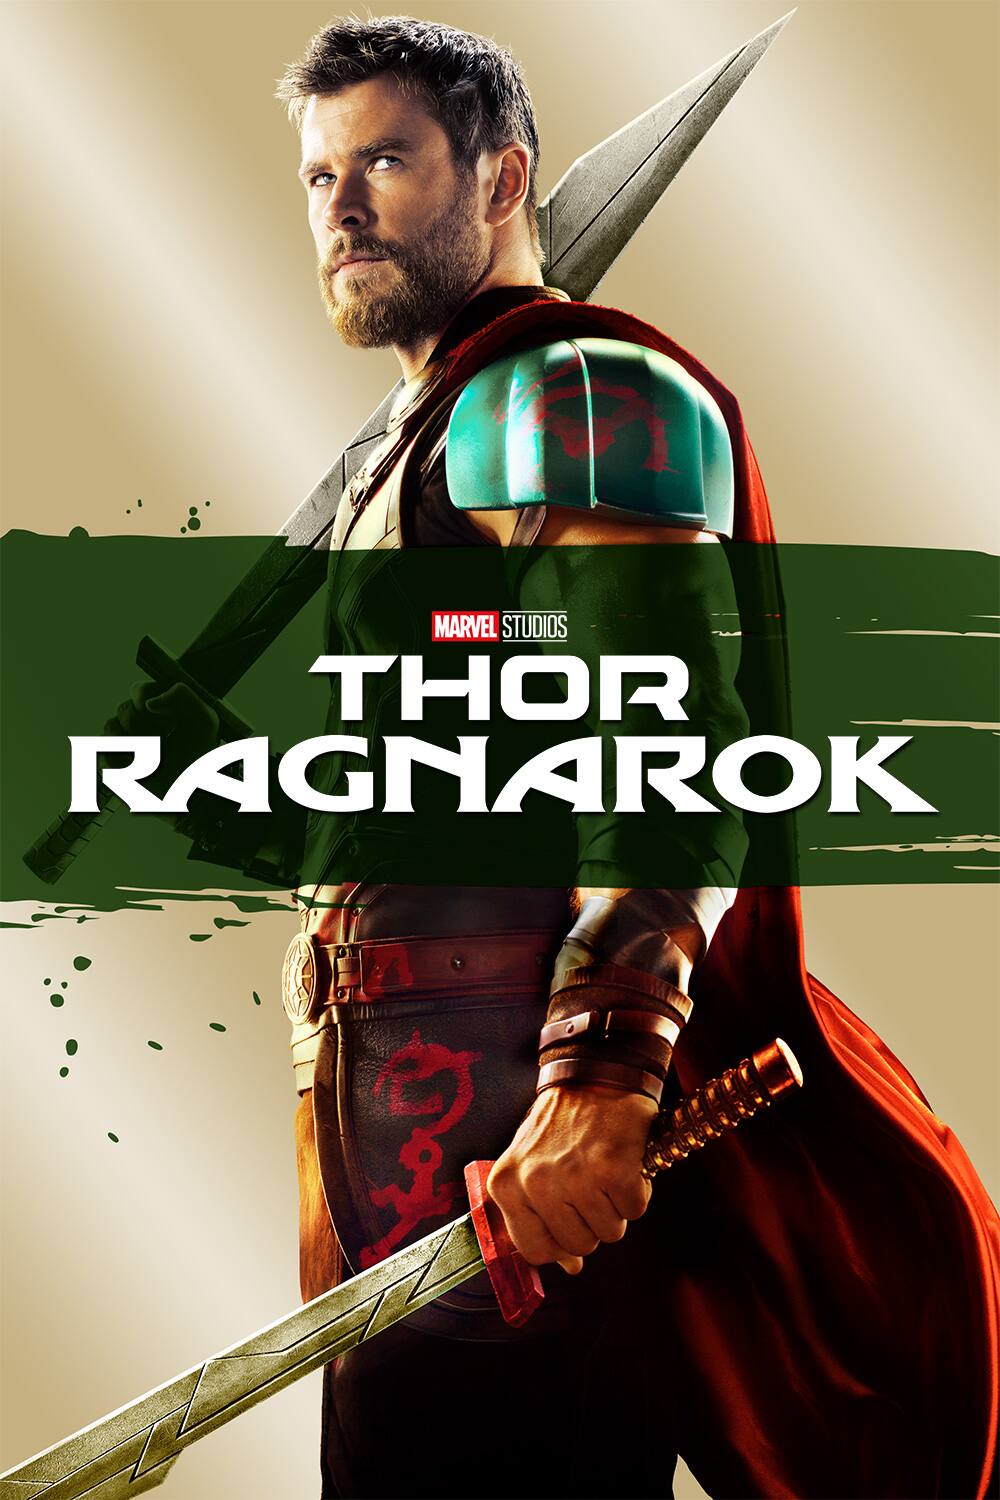 instal the new version for apple Thor: Ragnarok